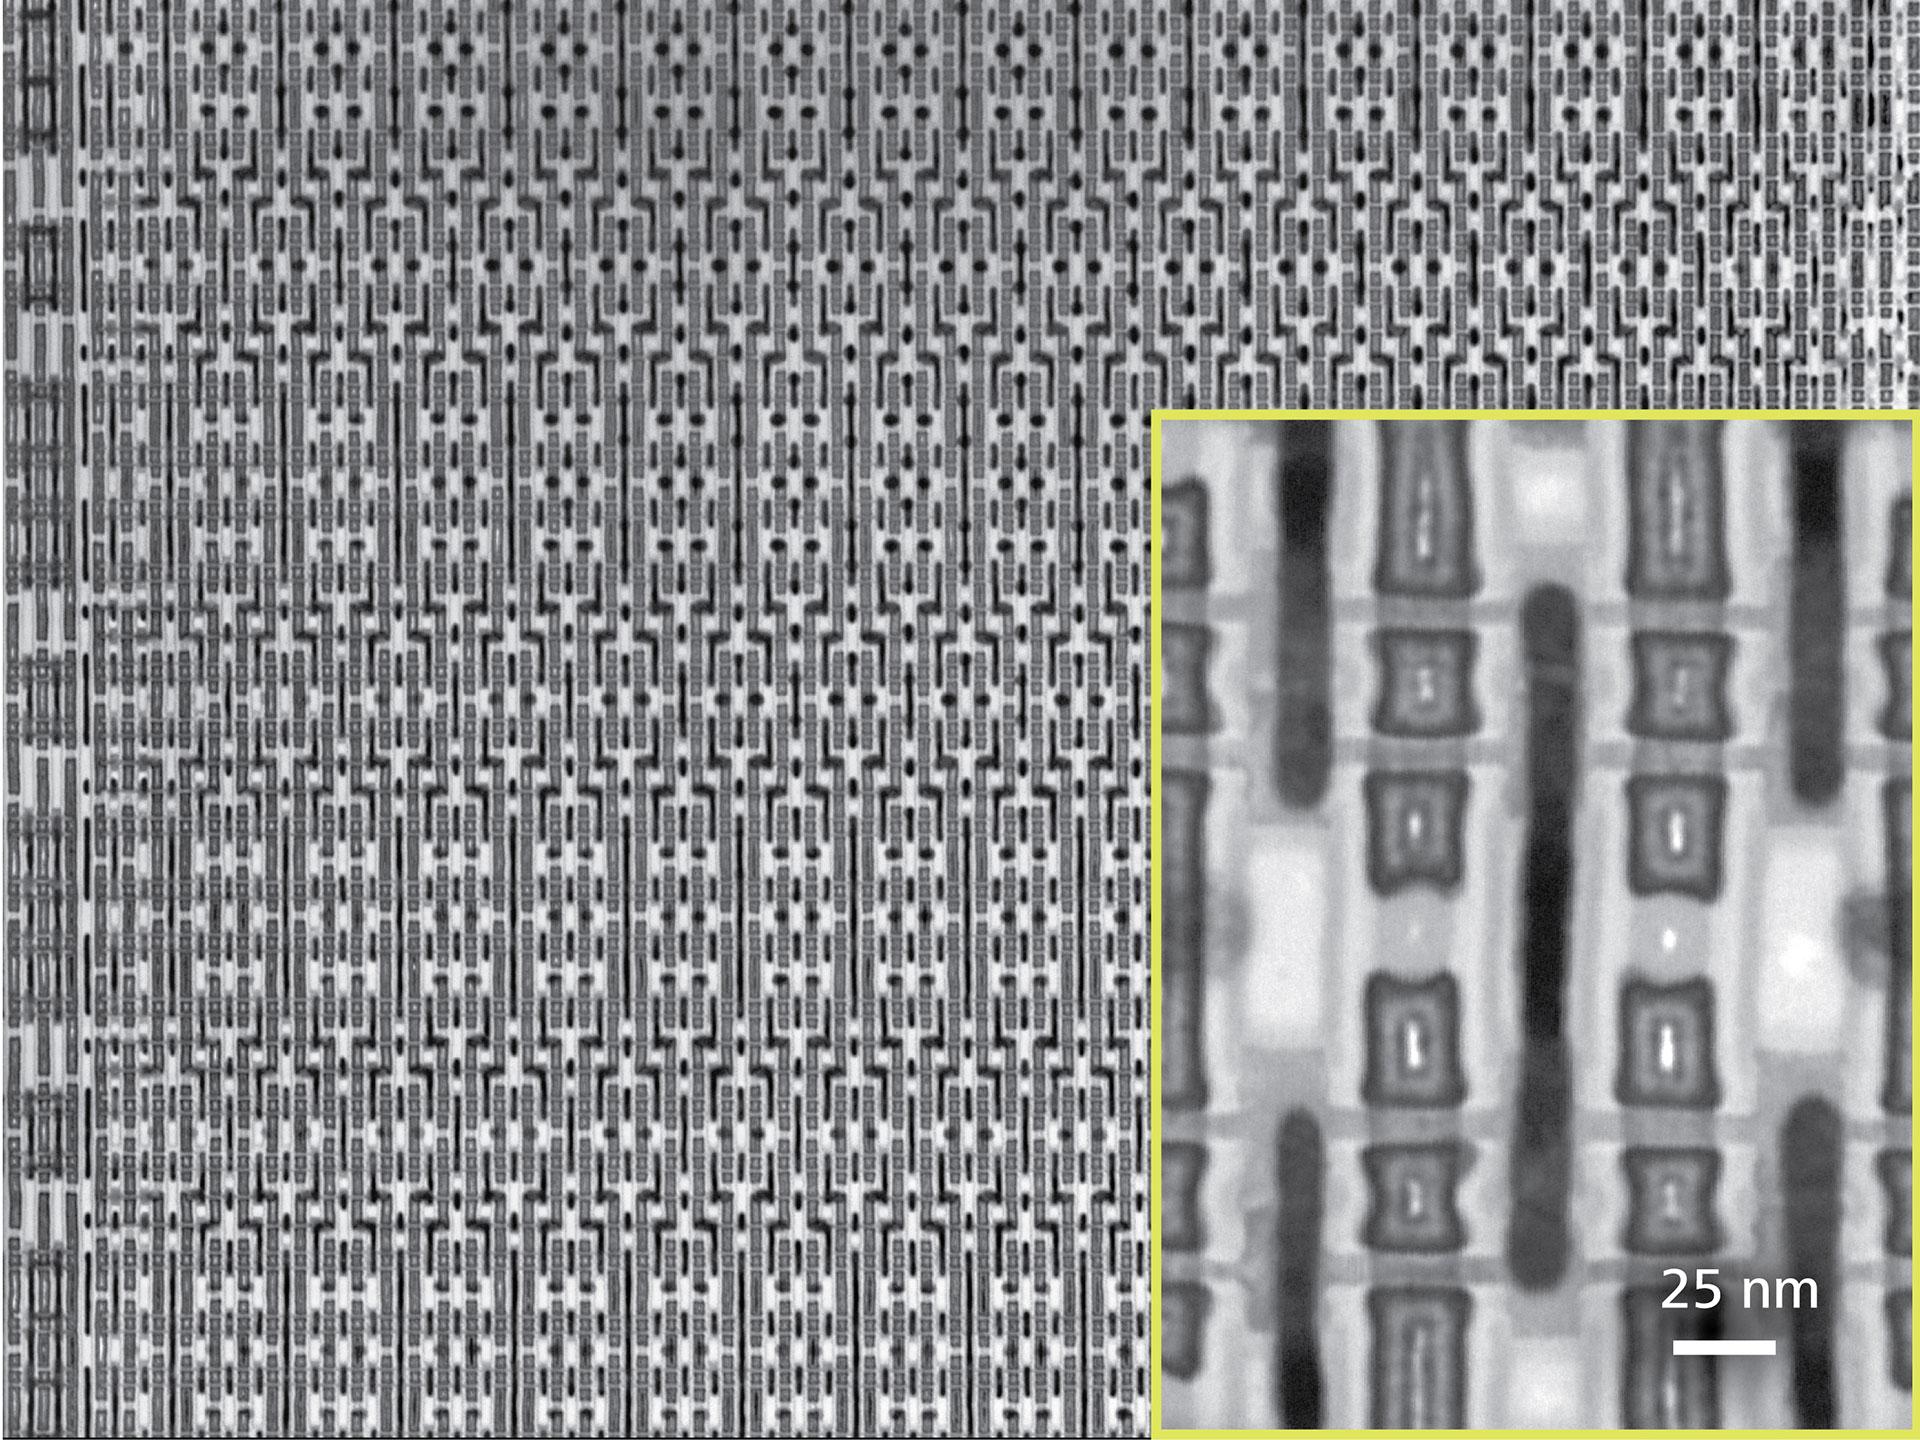 FIB-SEMによる7 nm SRAMの薄膜試料作成